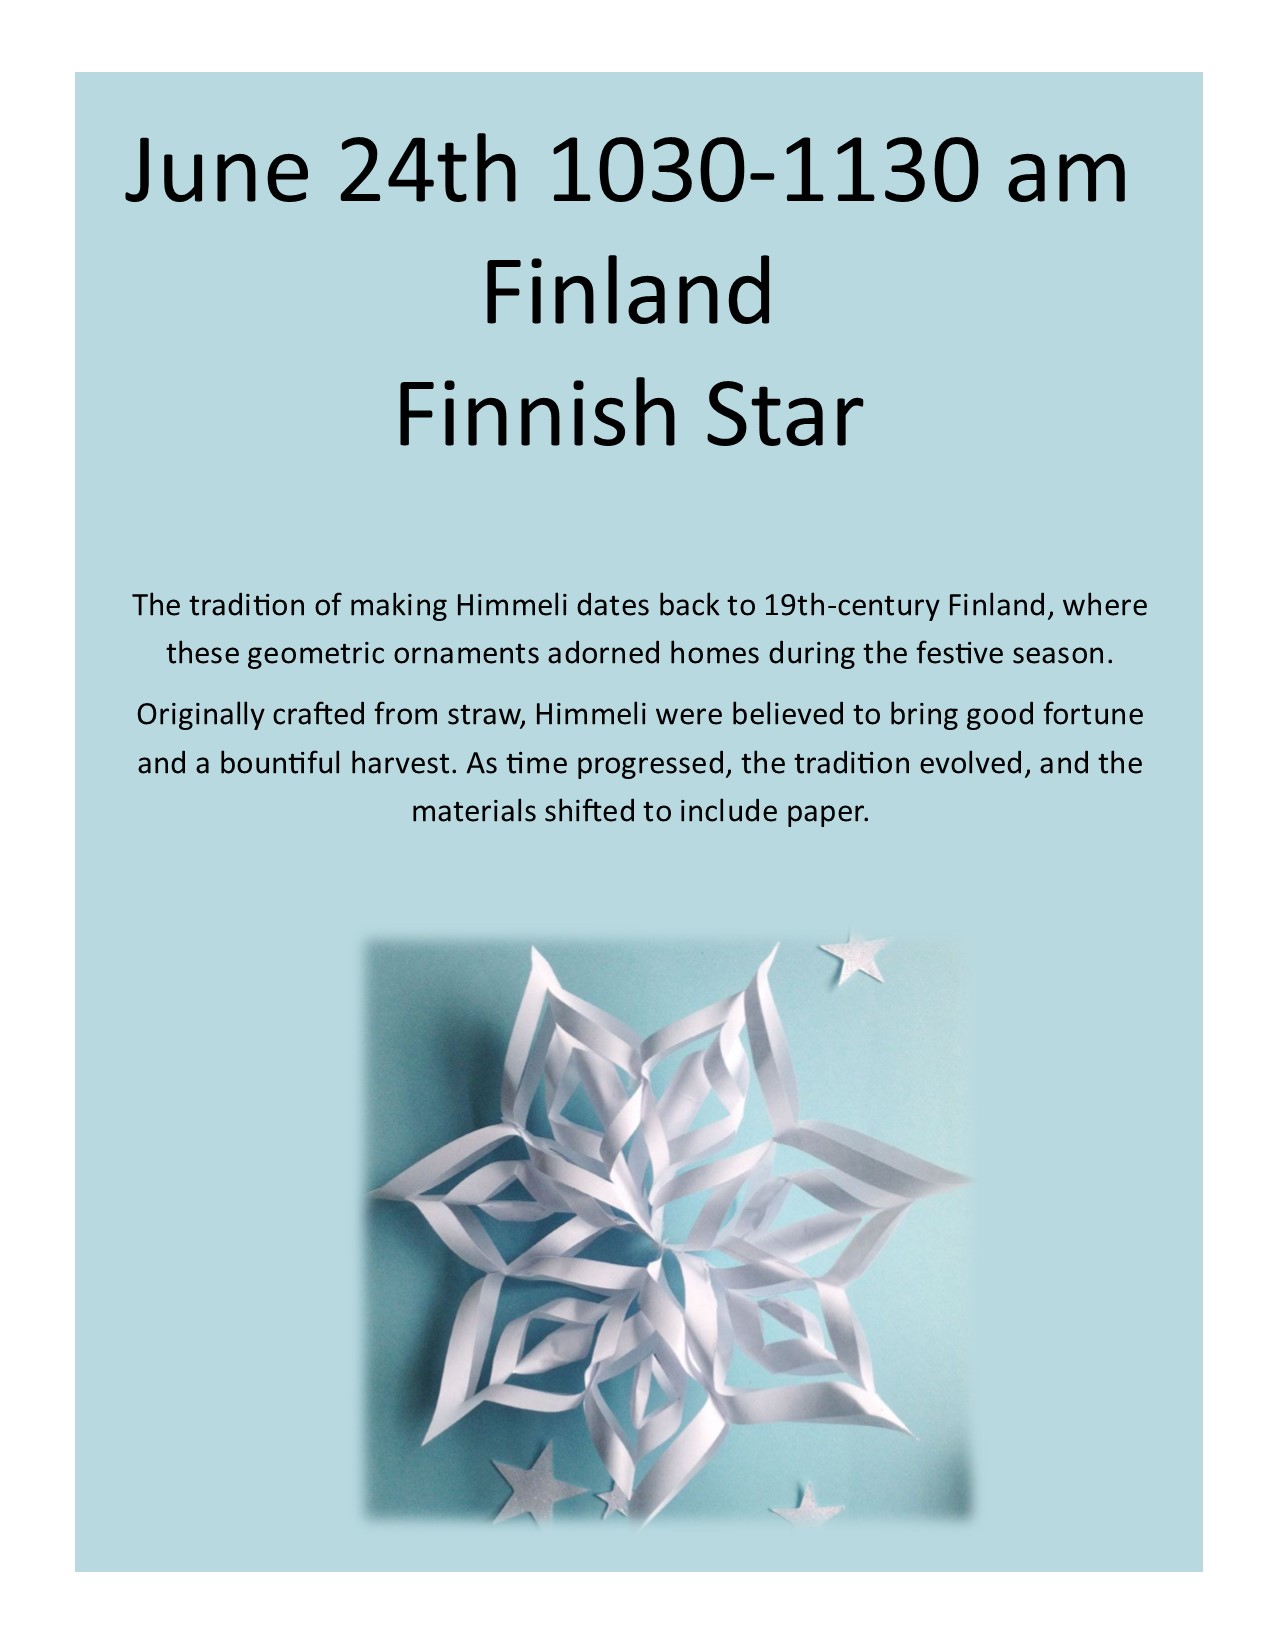 Finnish Star